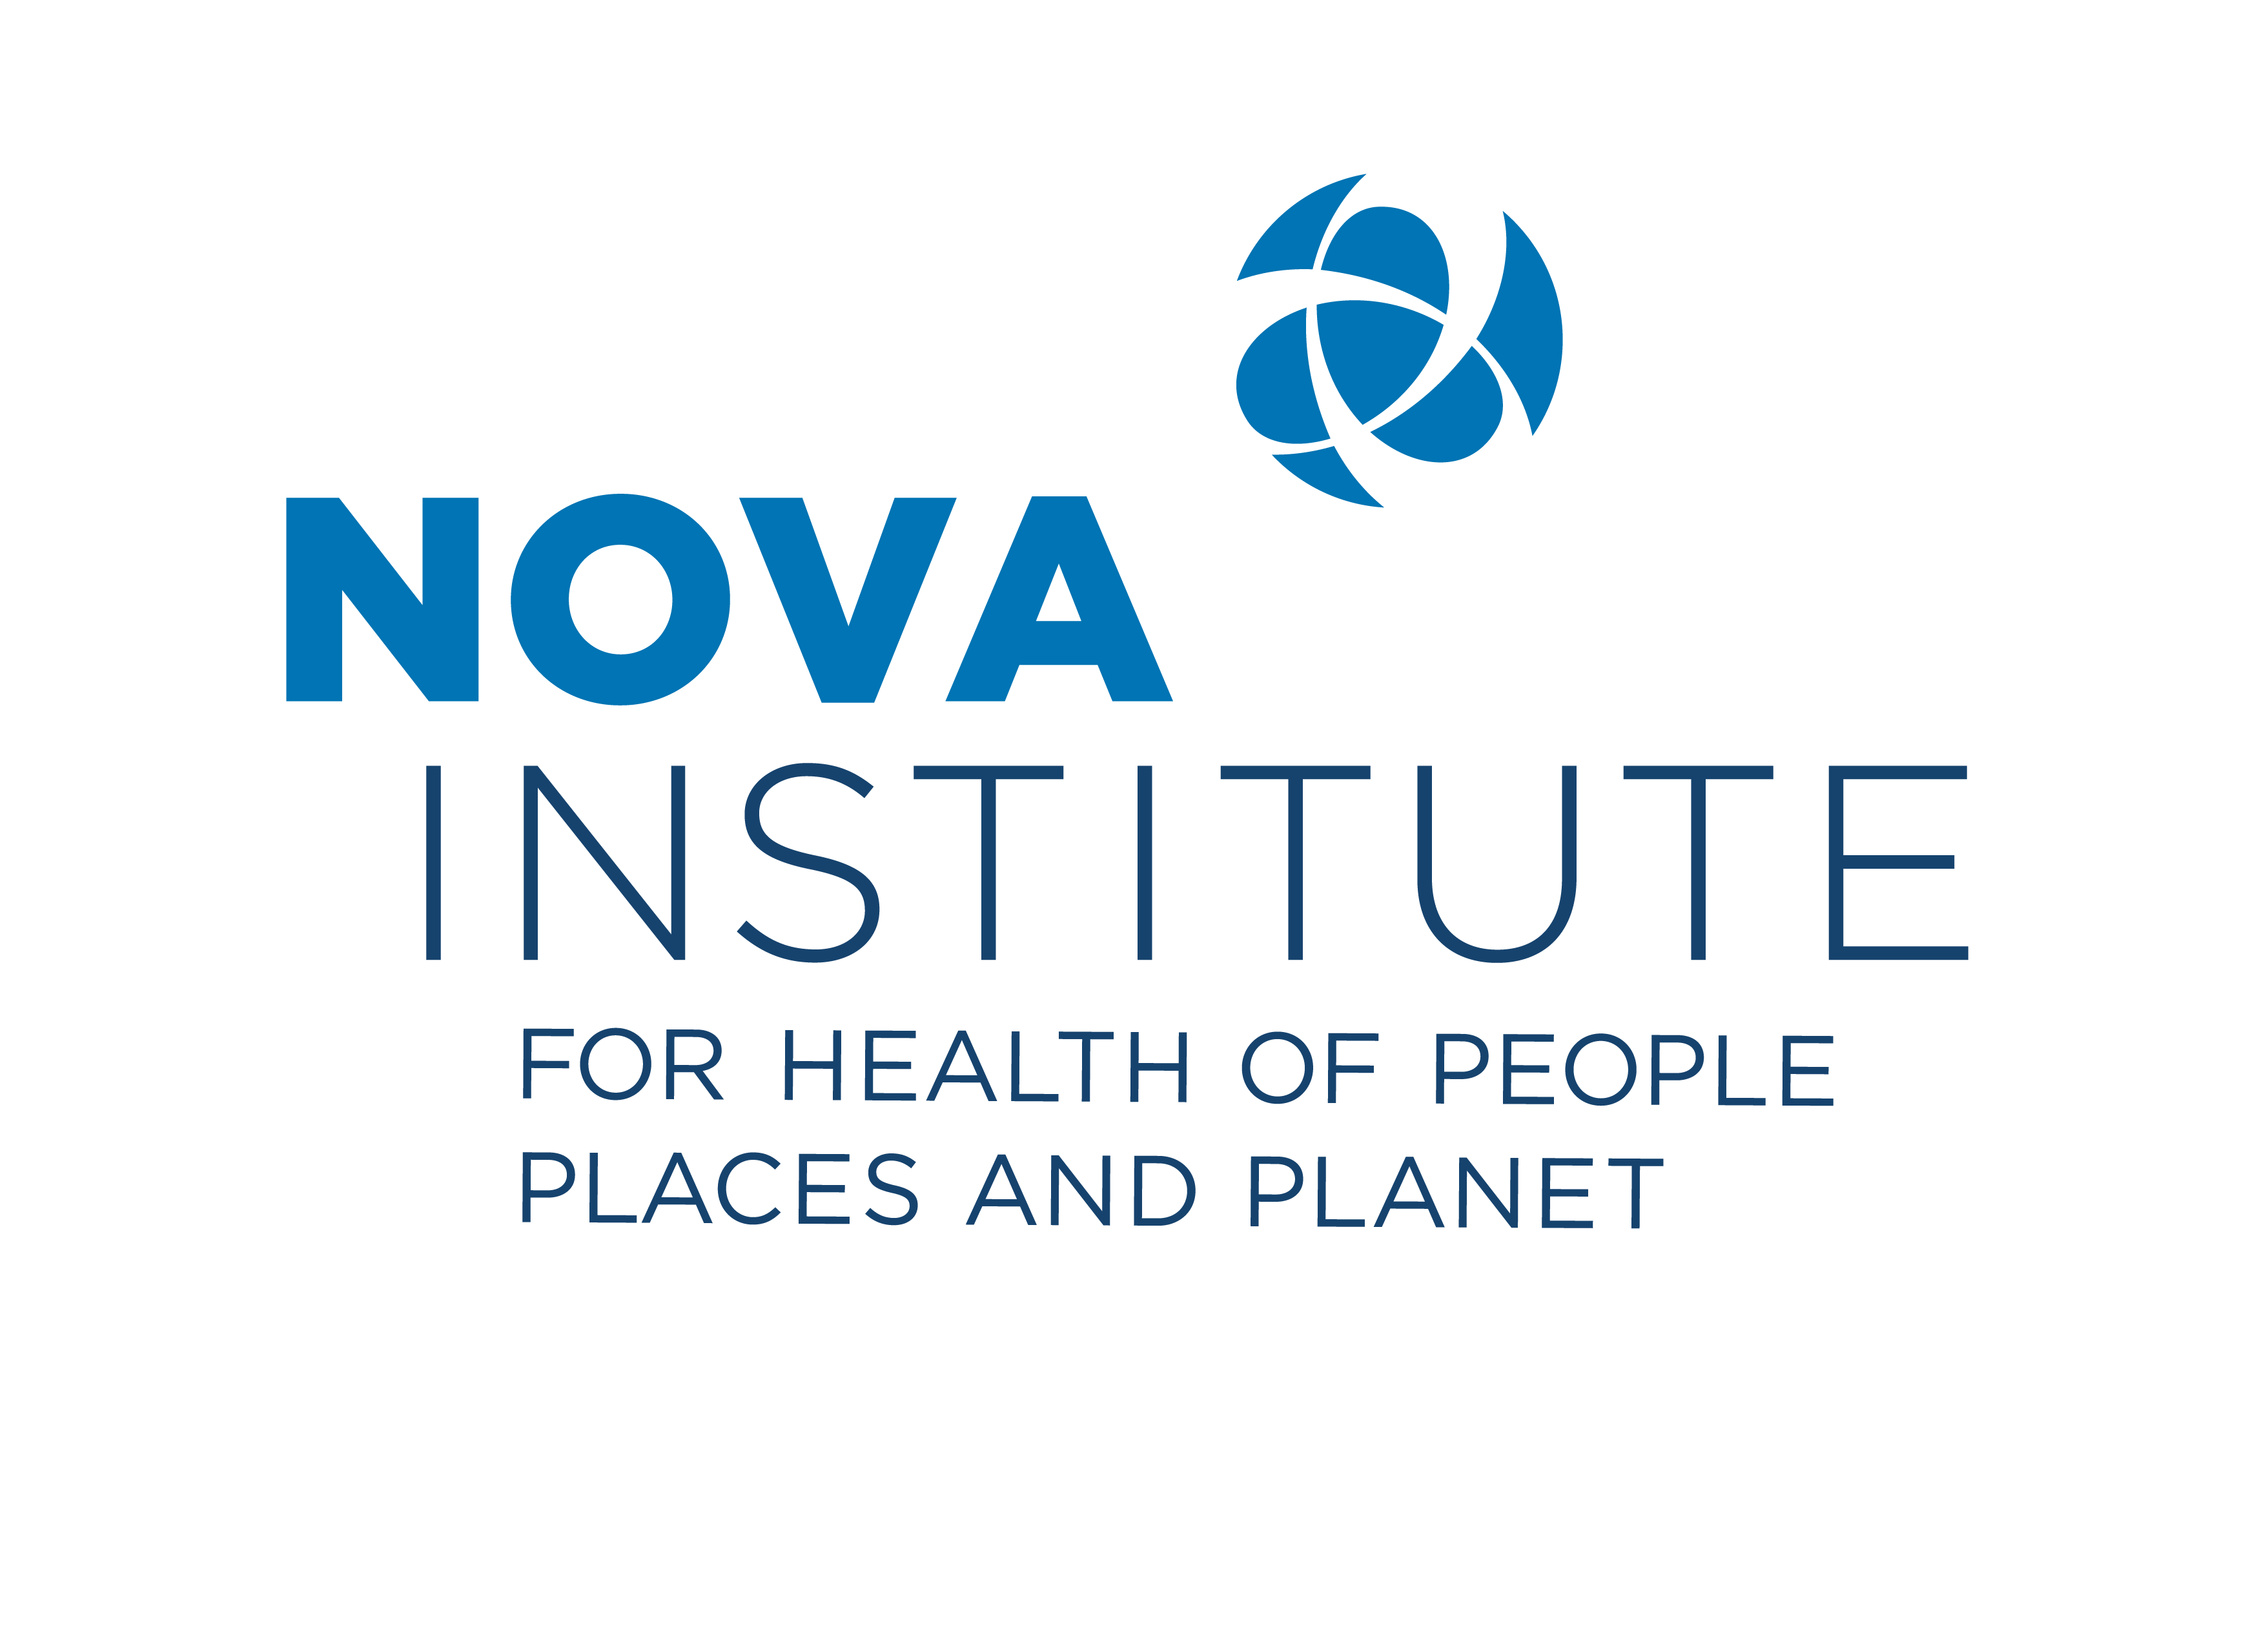 Nova Institute for Health